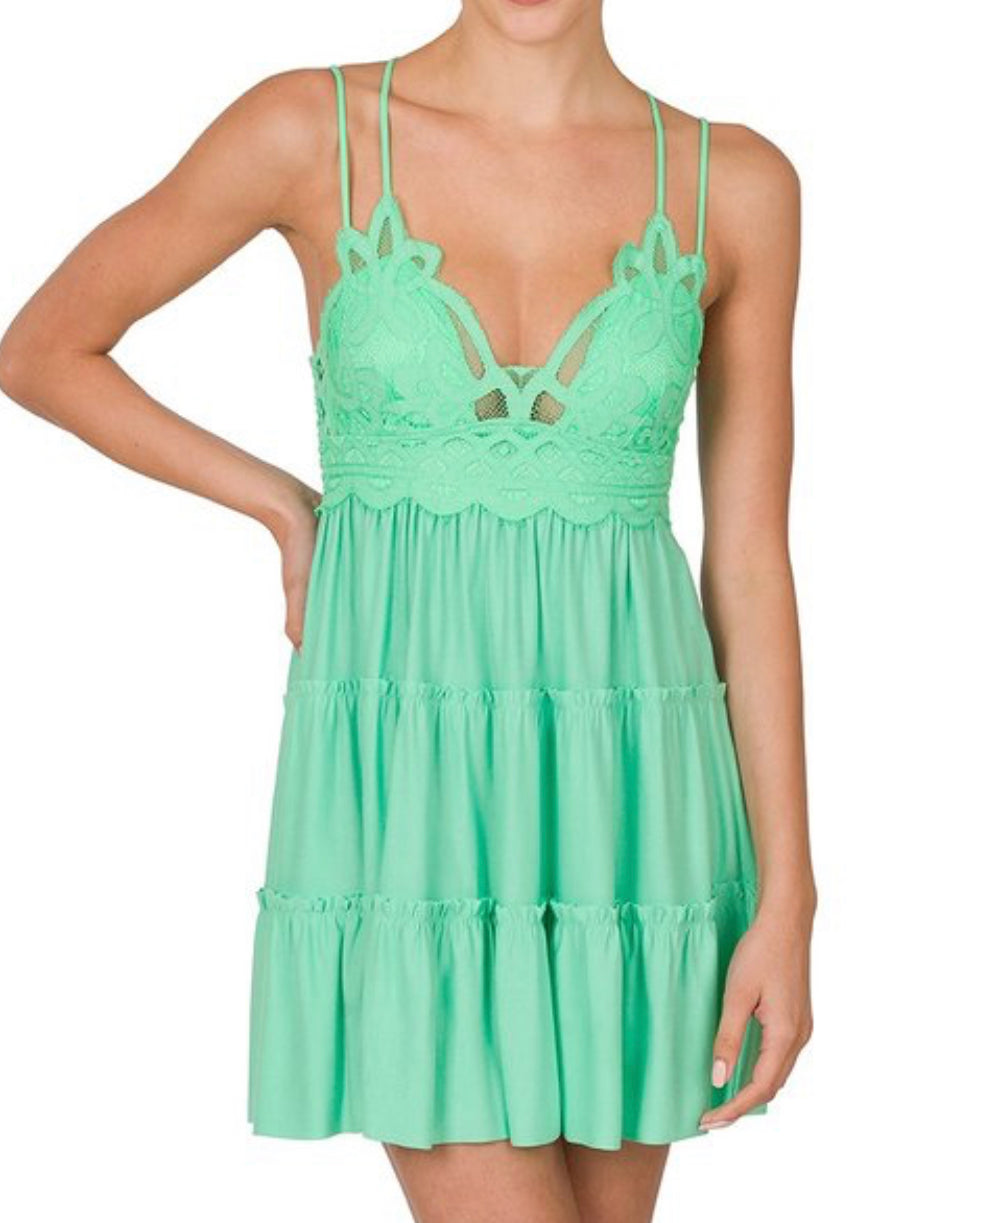 Green Mint Crochet Lace Ruffle Cami Dress W/ Removable Bra Pad